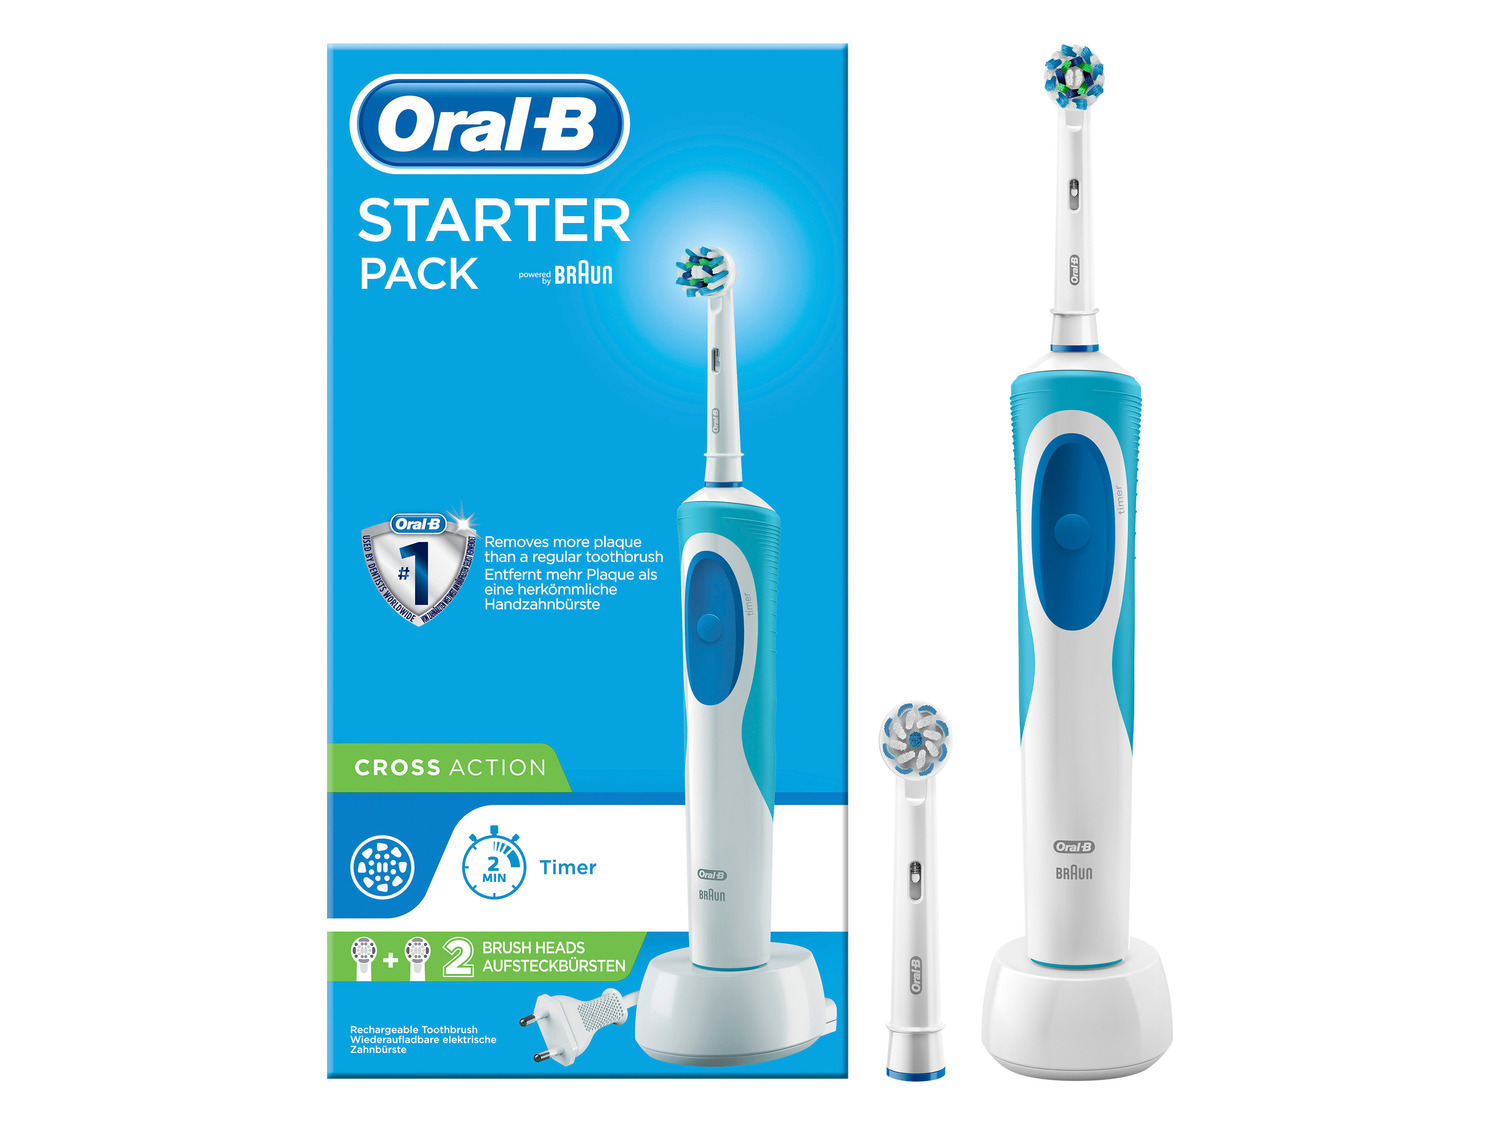 Evalueerbaar Rond en rond Betuttelen Oral-B Elektrische tandenborstel Starterpack | Lidl.be